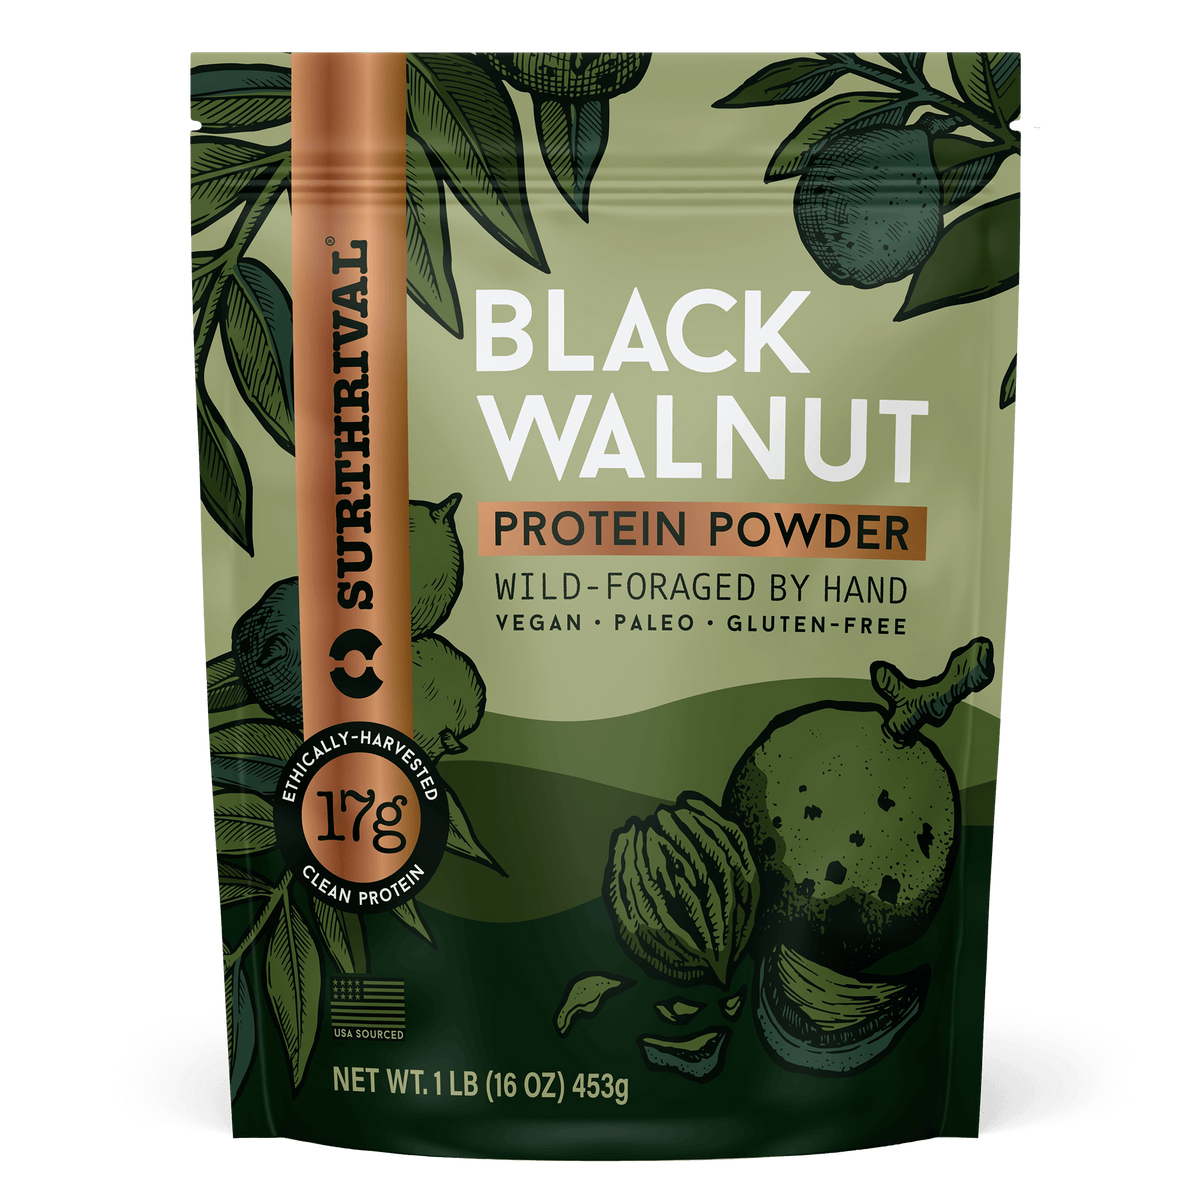 Black Walnut Protein Powder